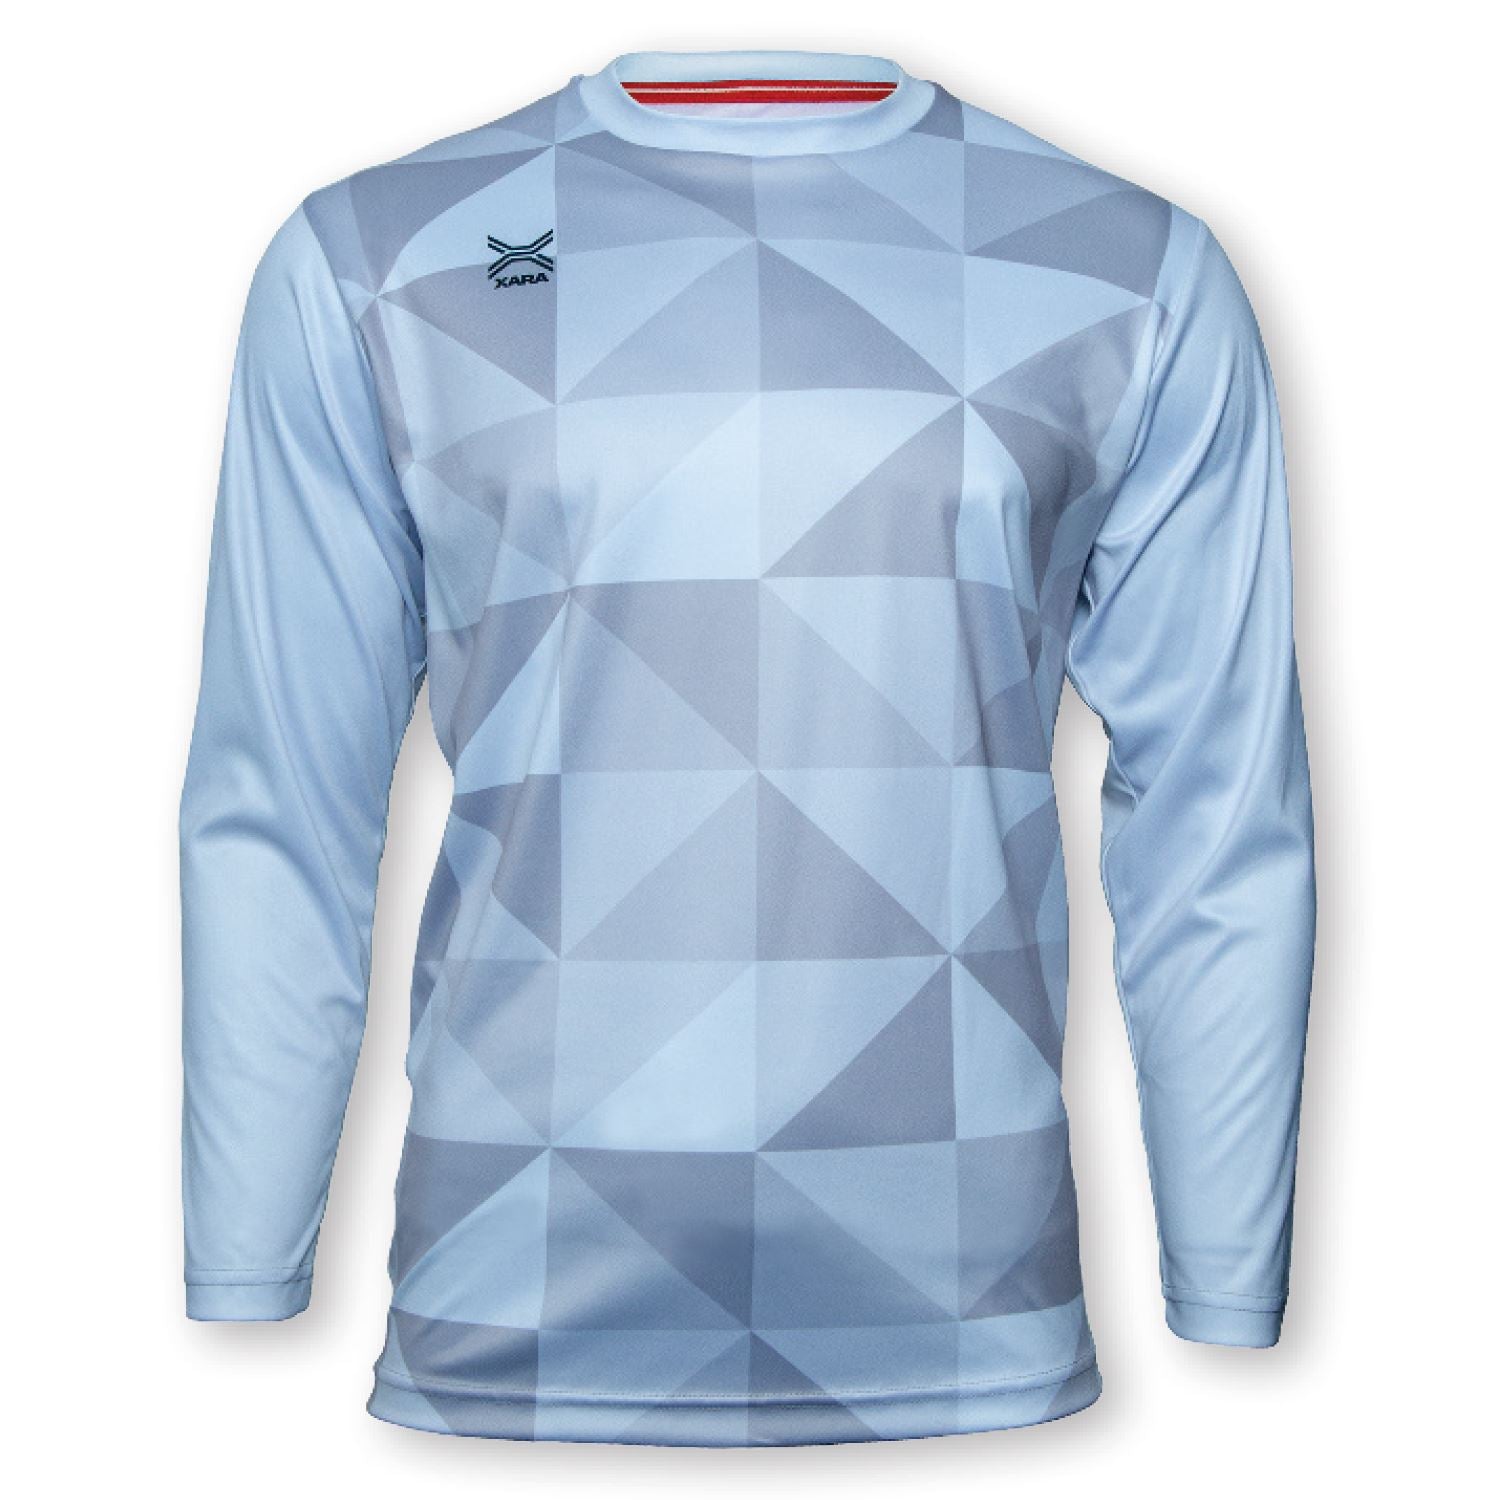 Shutout Goal Keeper Shirt - Unisex Shirt Xara Soccer Grey Youth Small 